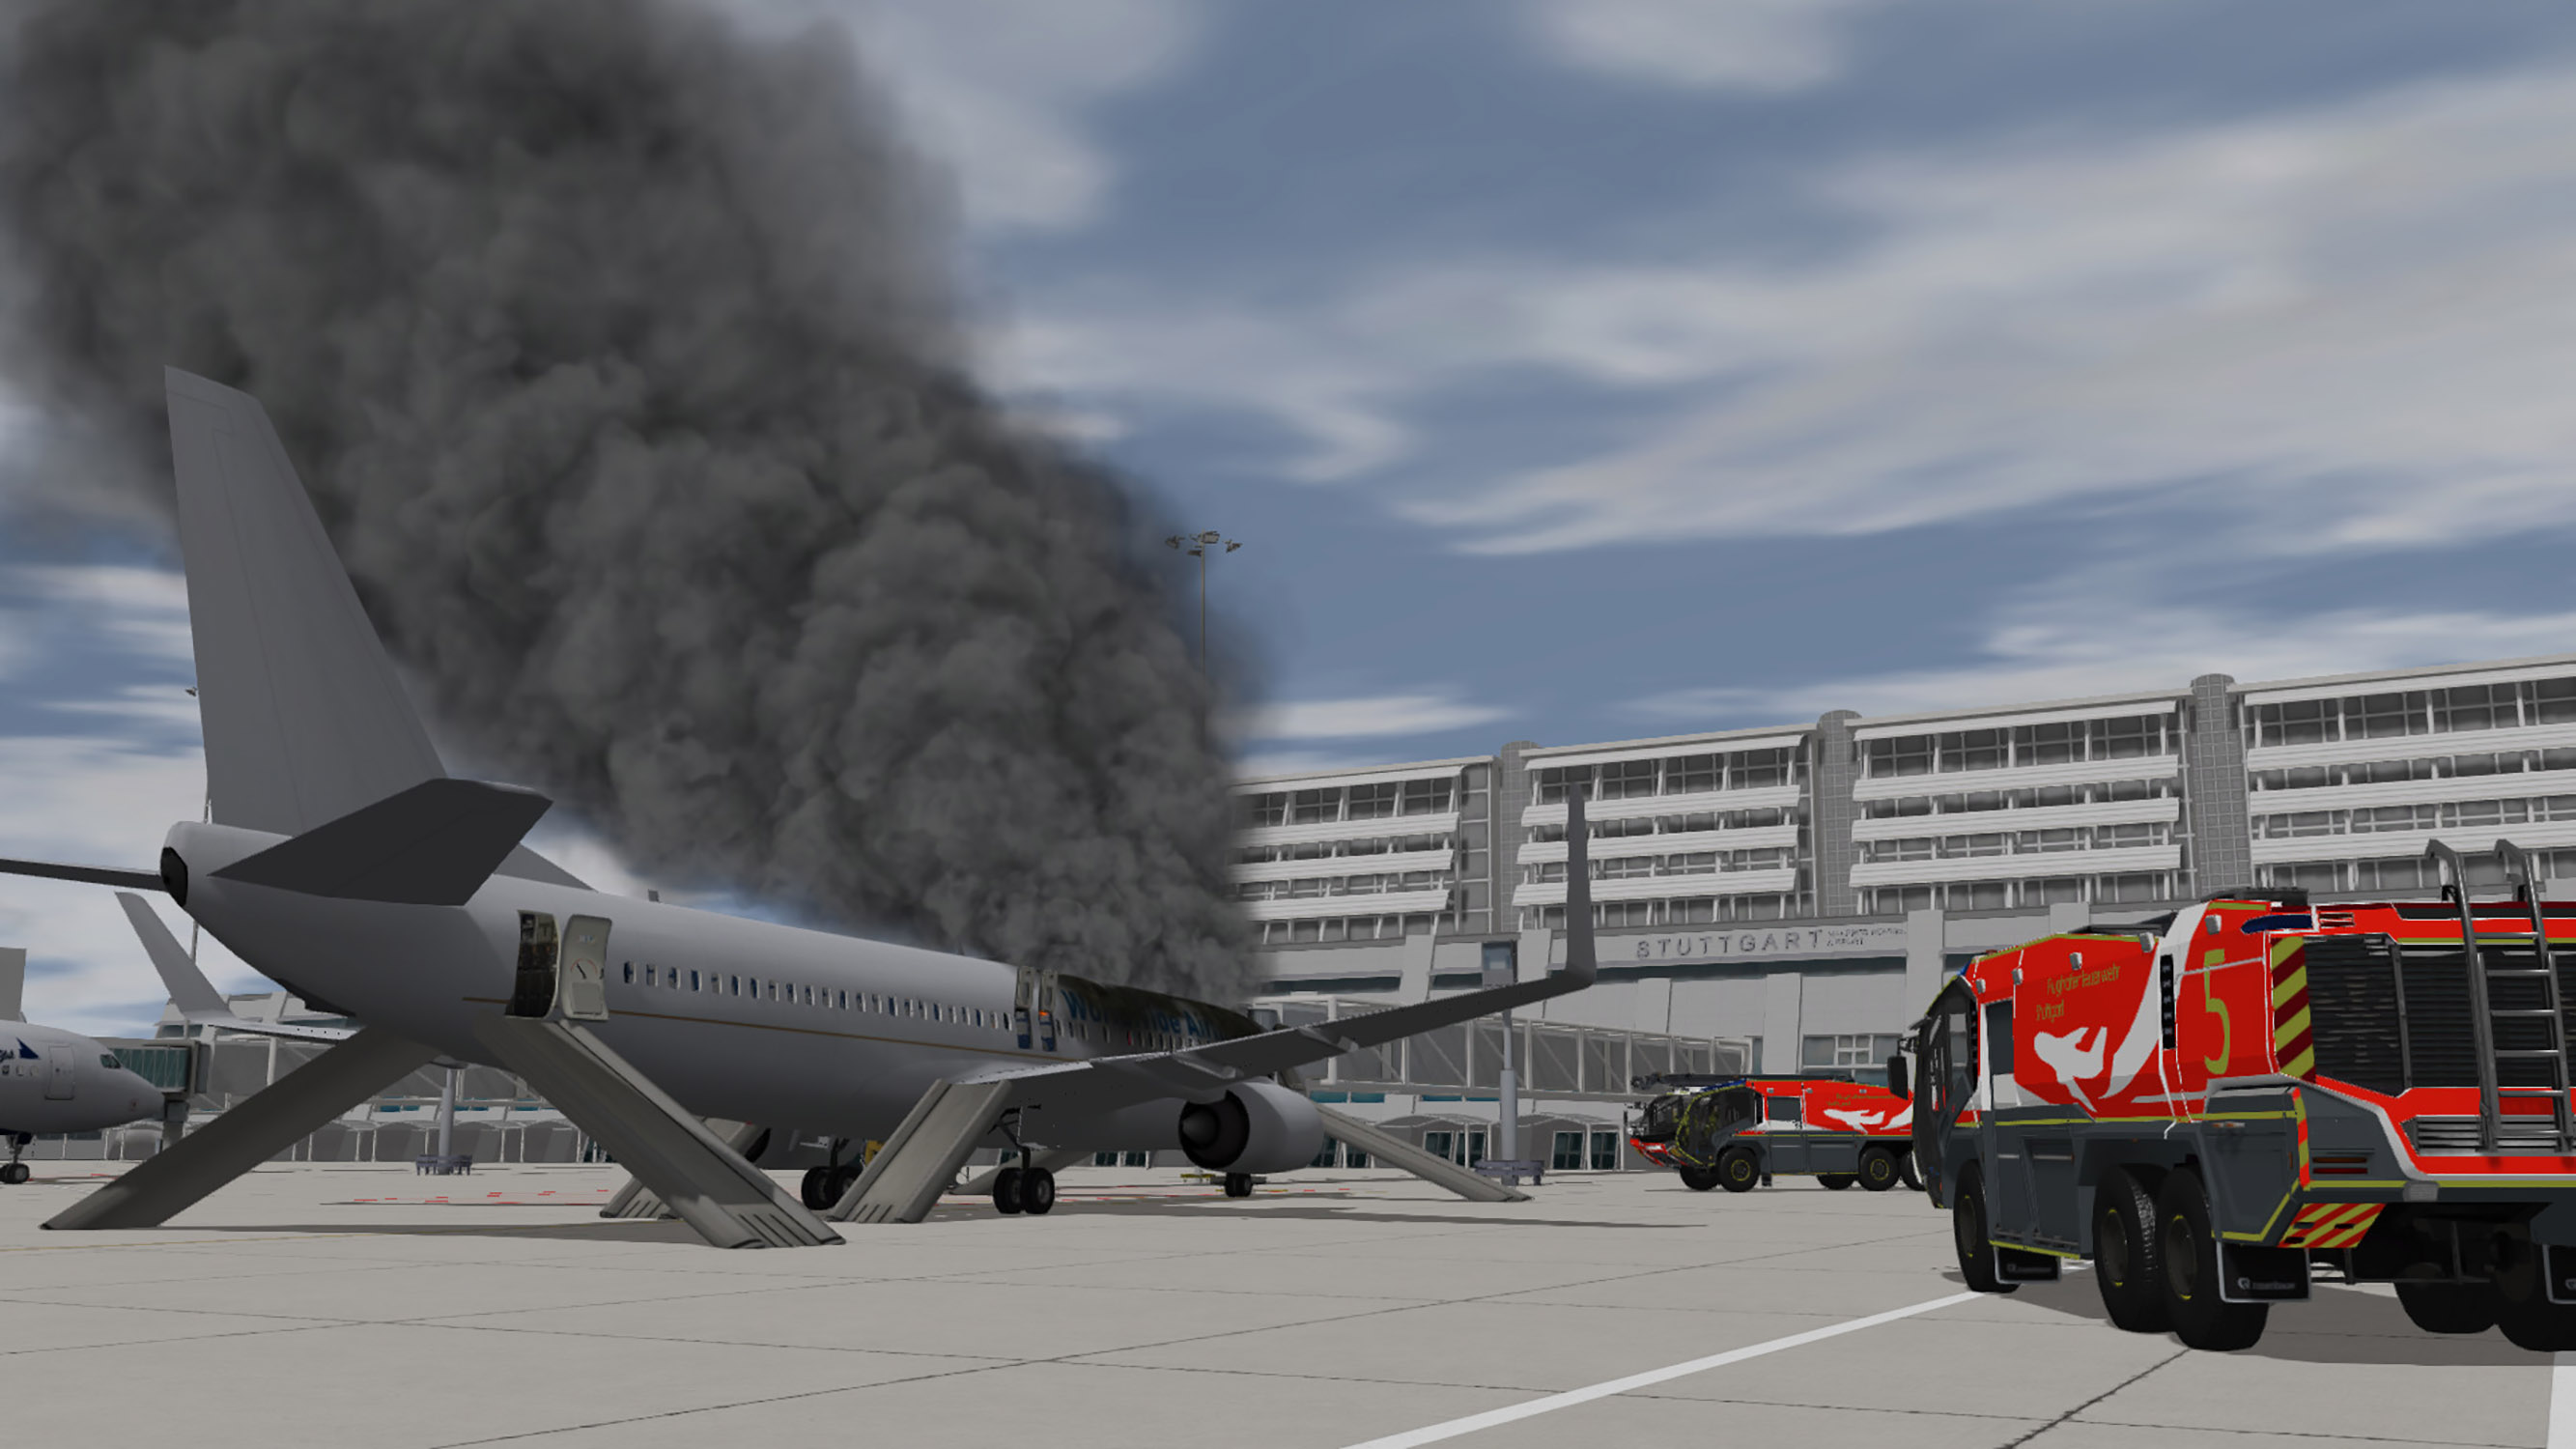 Two Rosenbauer Panther ARFF Trucks responding to an interior aircraft fire at Stuttgart Airport while passengers evacuate.